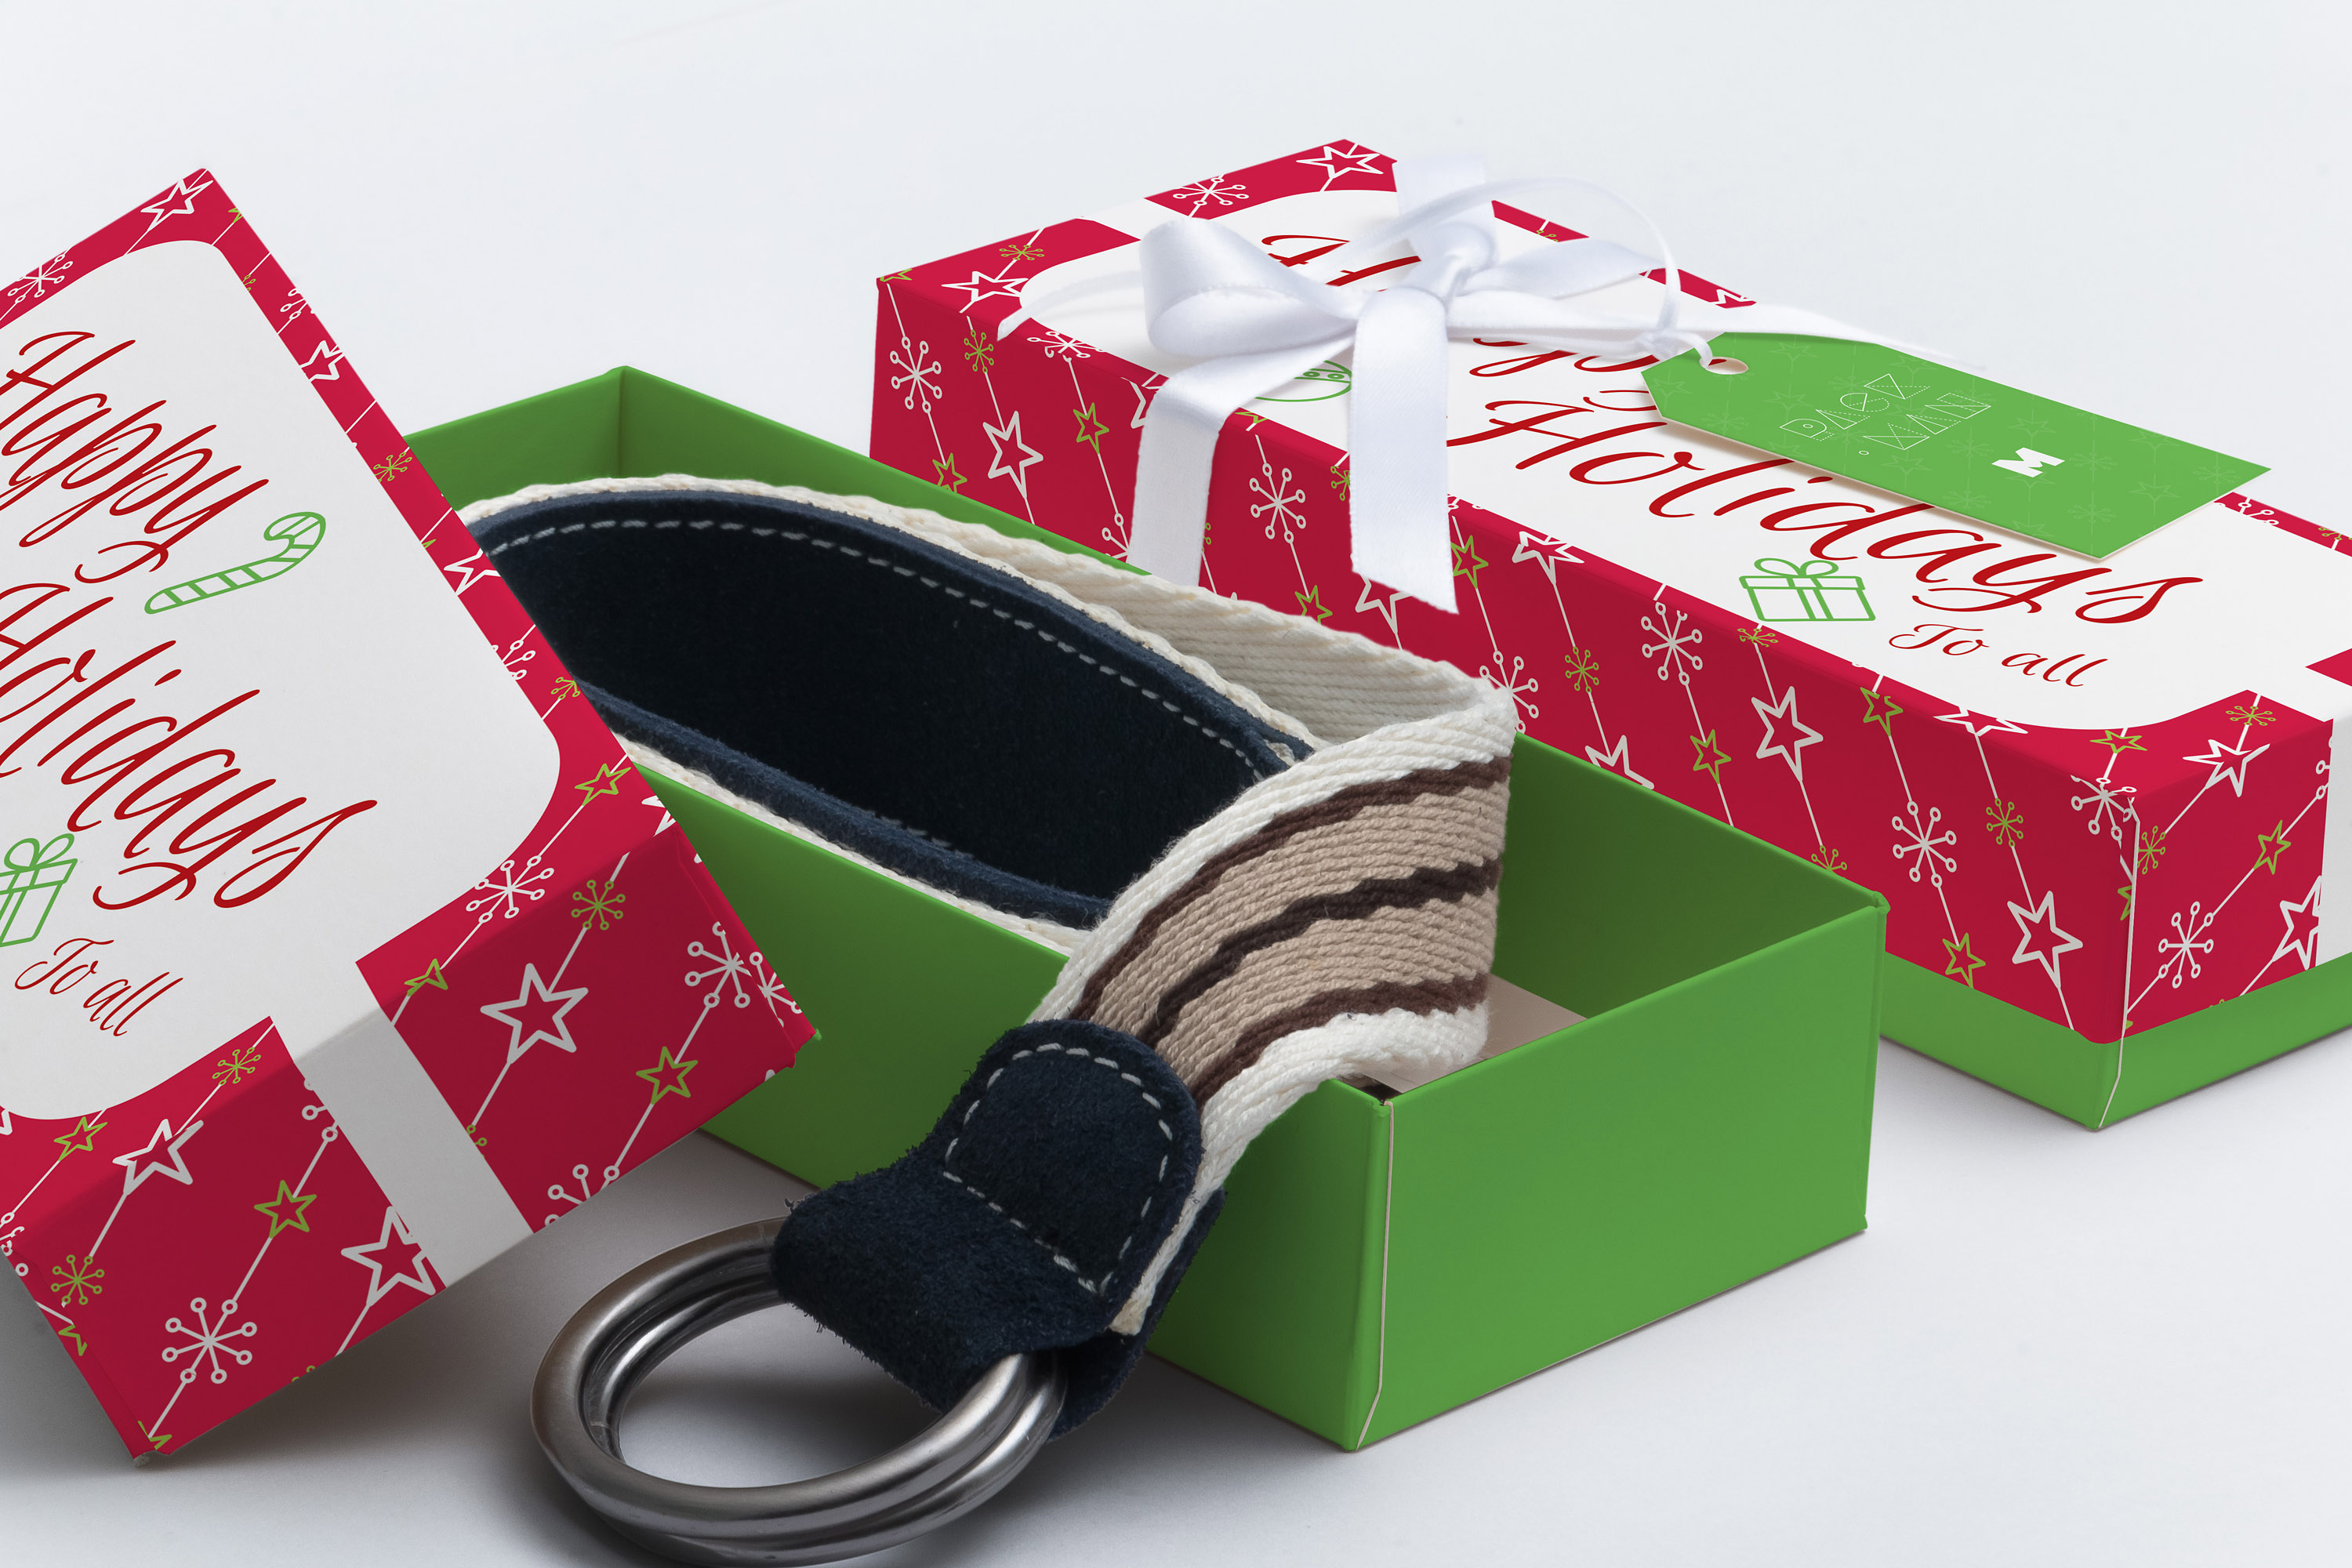 矩形精品礼品盒外观设计效果图样机02 Rectangular Gift Box Mockup 02插图(1)